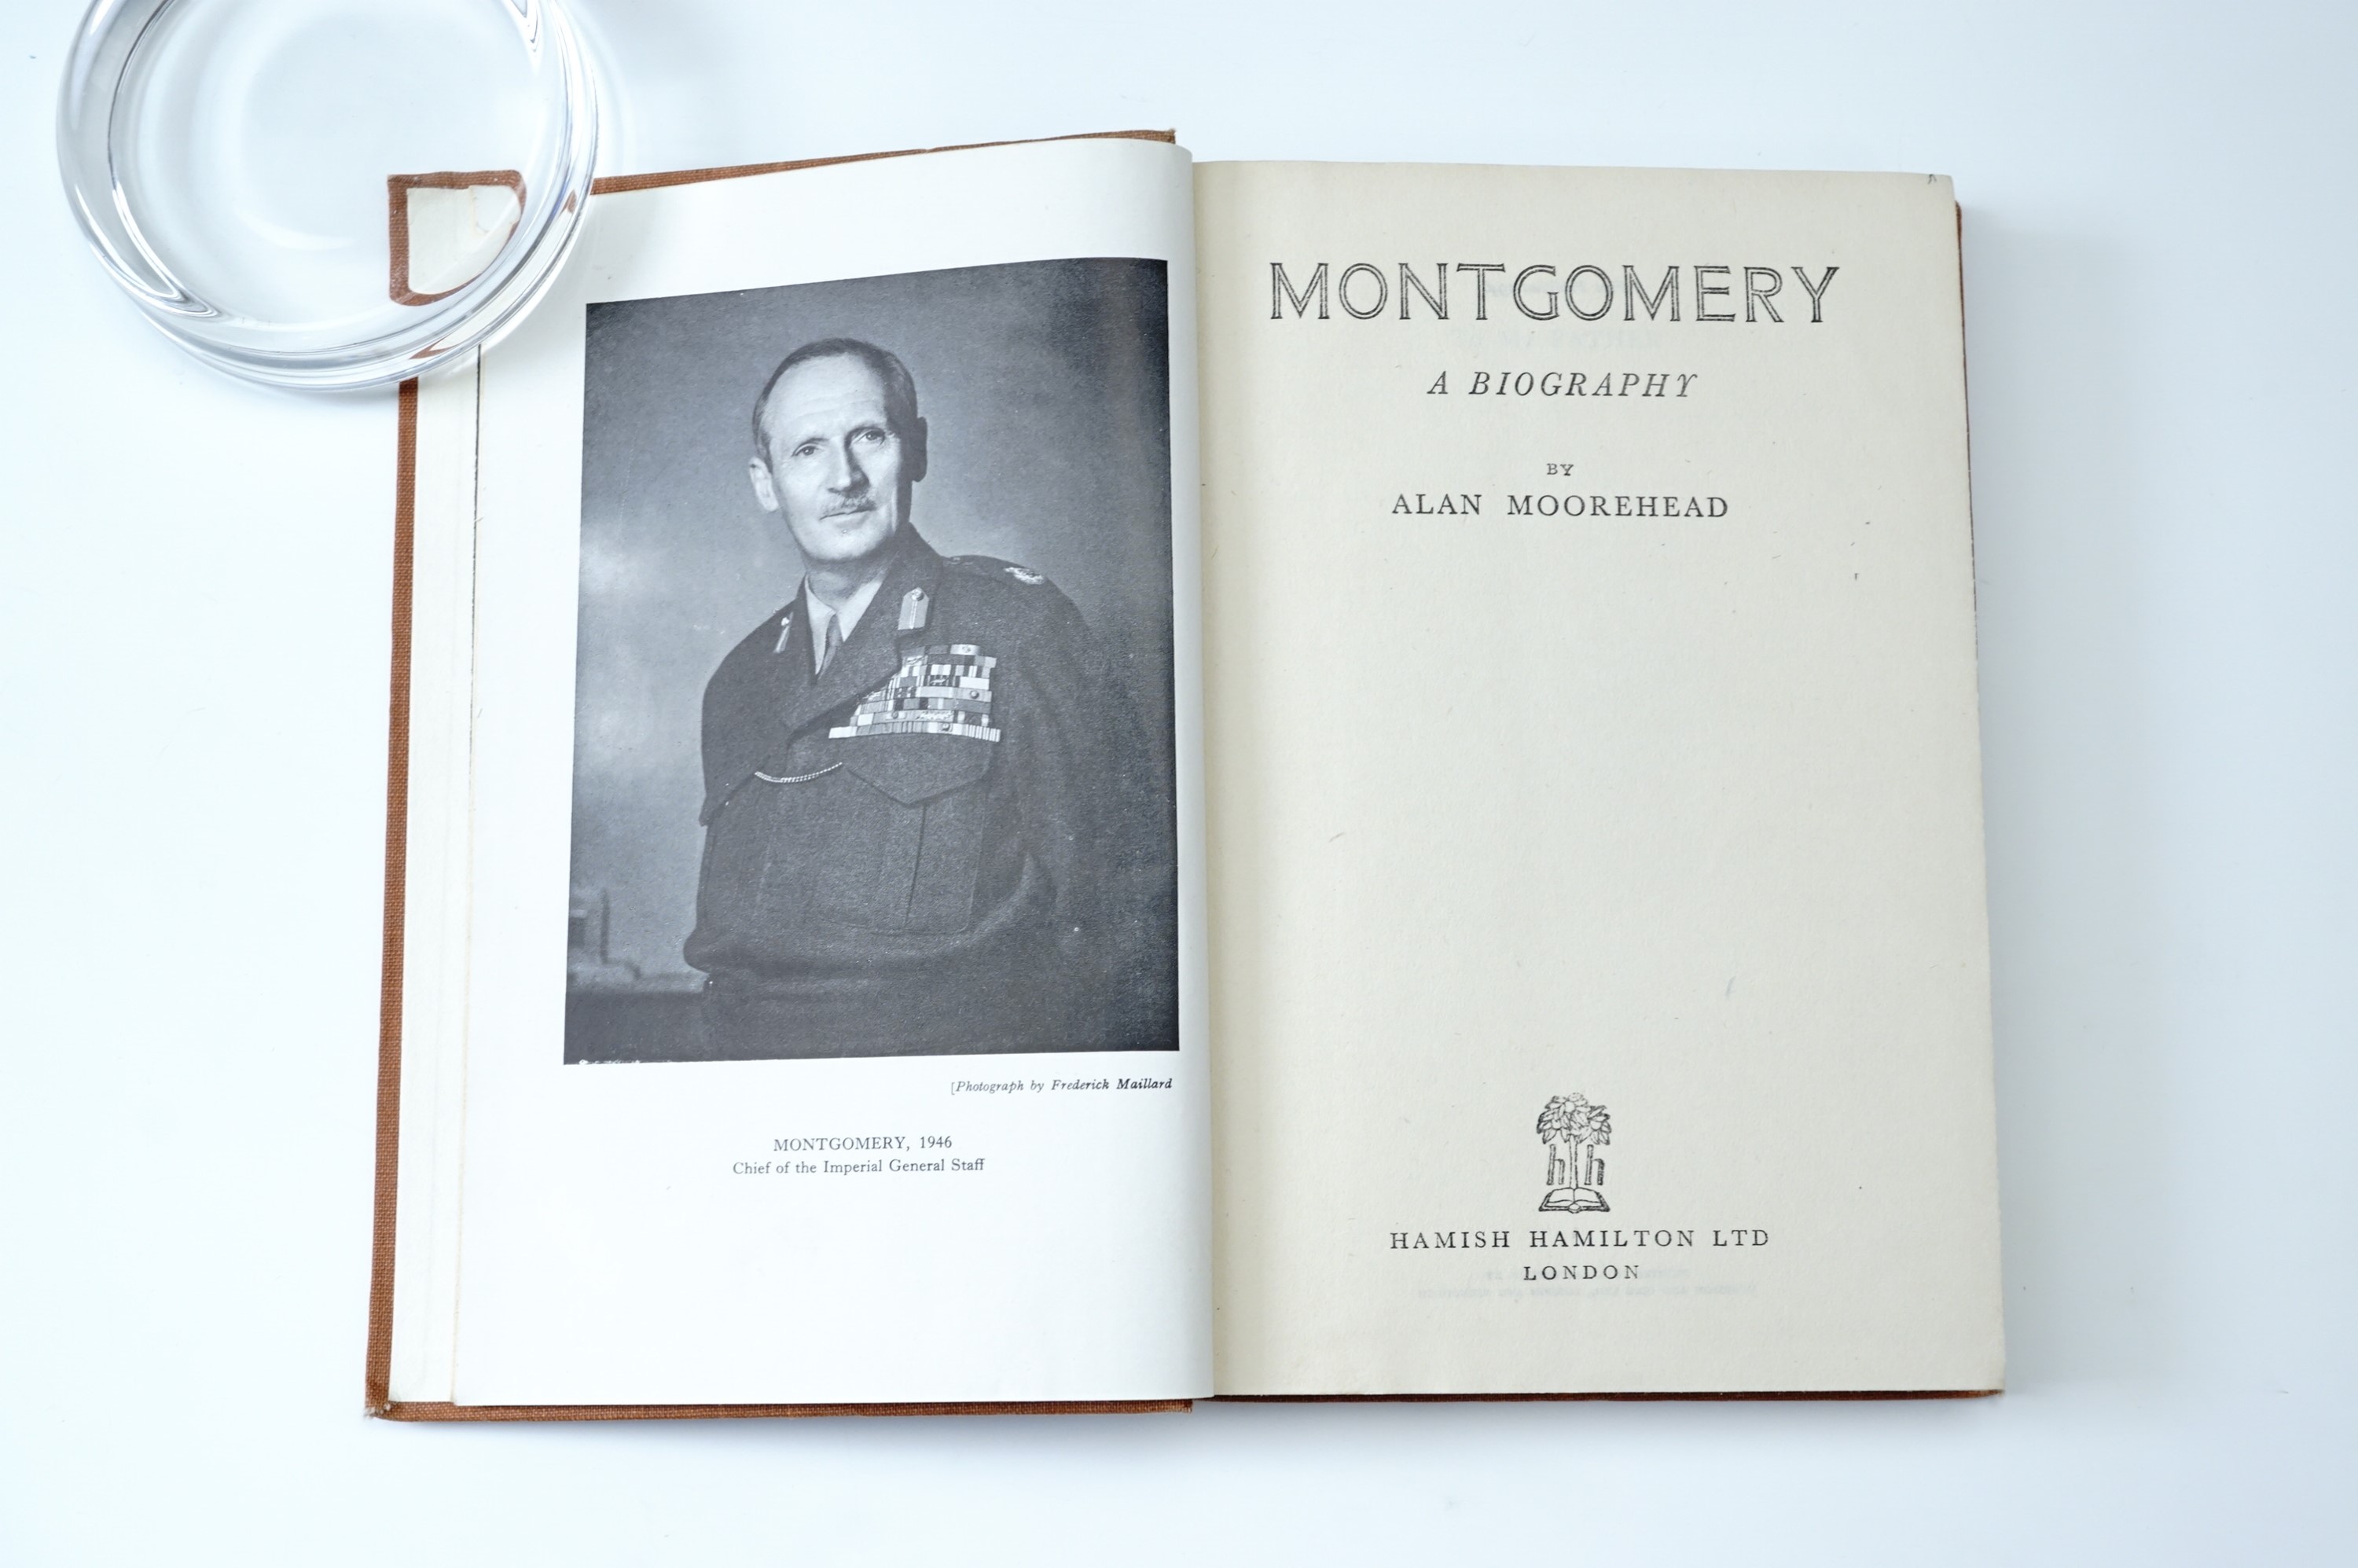 Alan Moorehead, "Montgomery, A Biography", 1946, Hamish Hamilton Ltd, London, 21 x 14.5 cm - Image 2 of 2